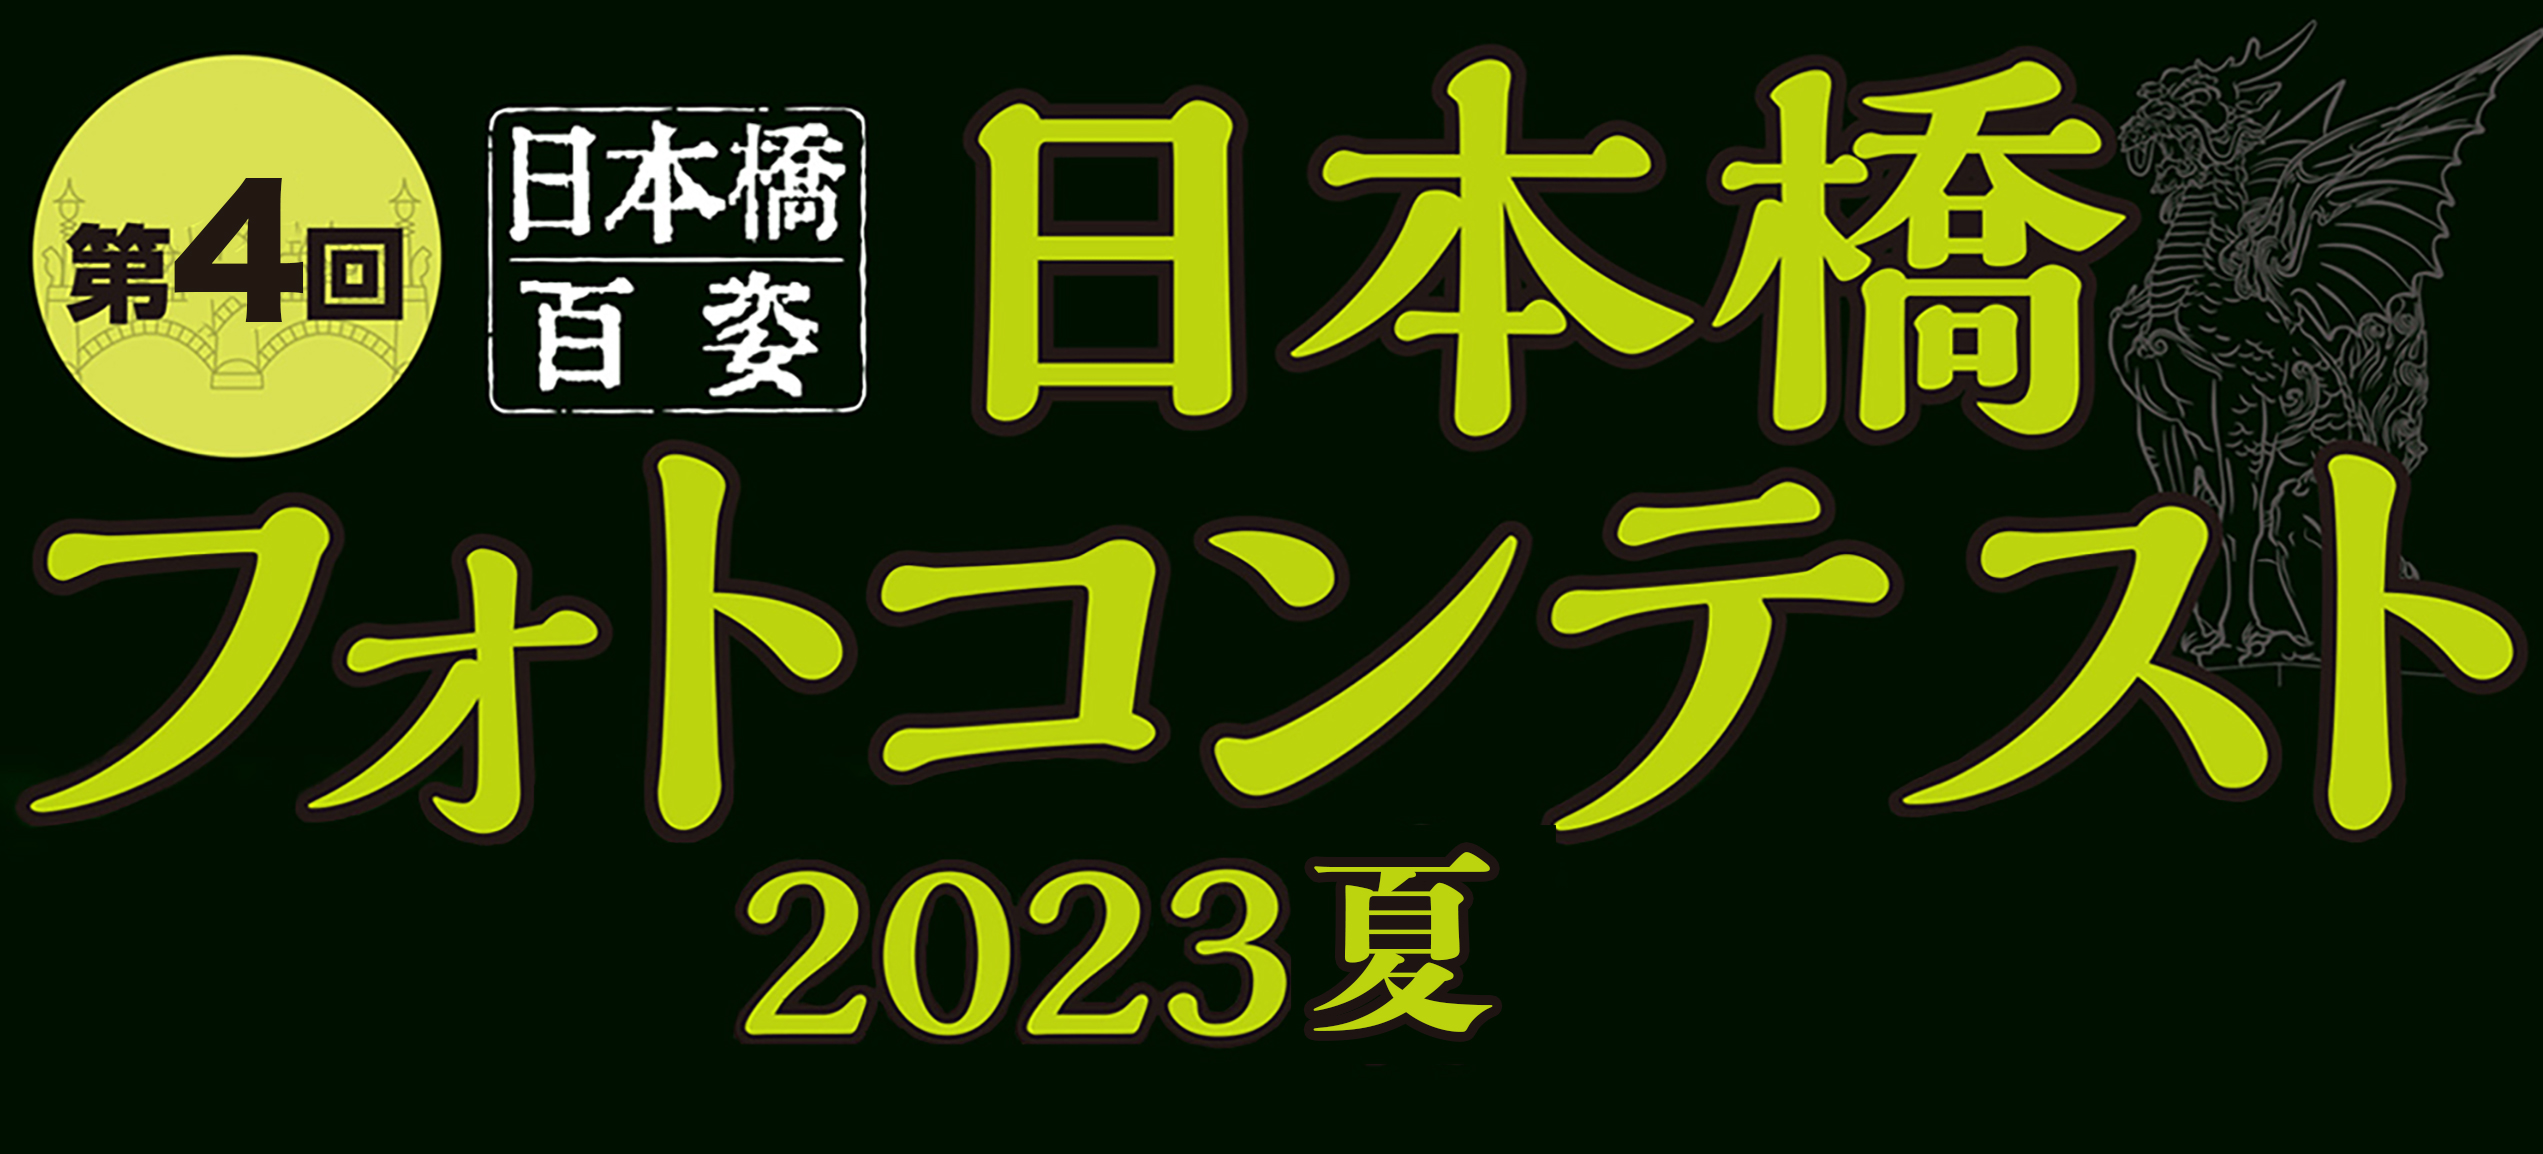 2nd Nihonbashi Photo Contest Winter 2023